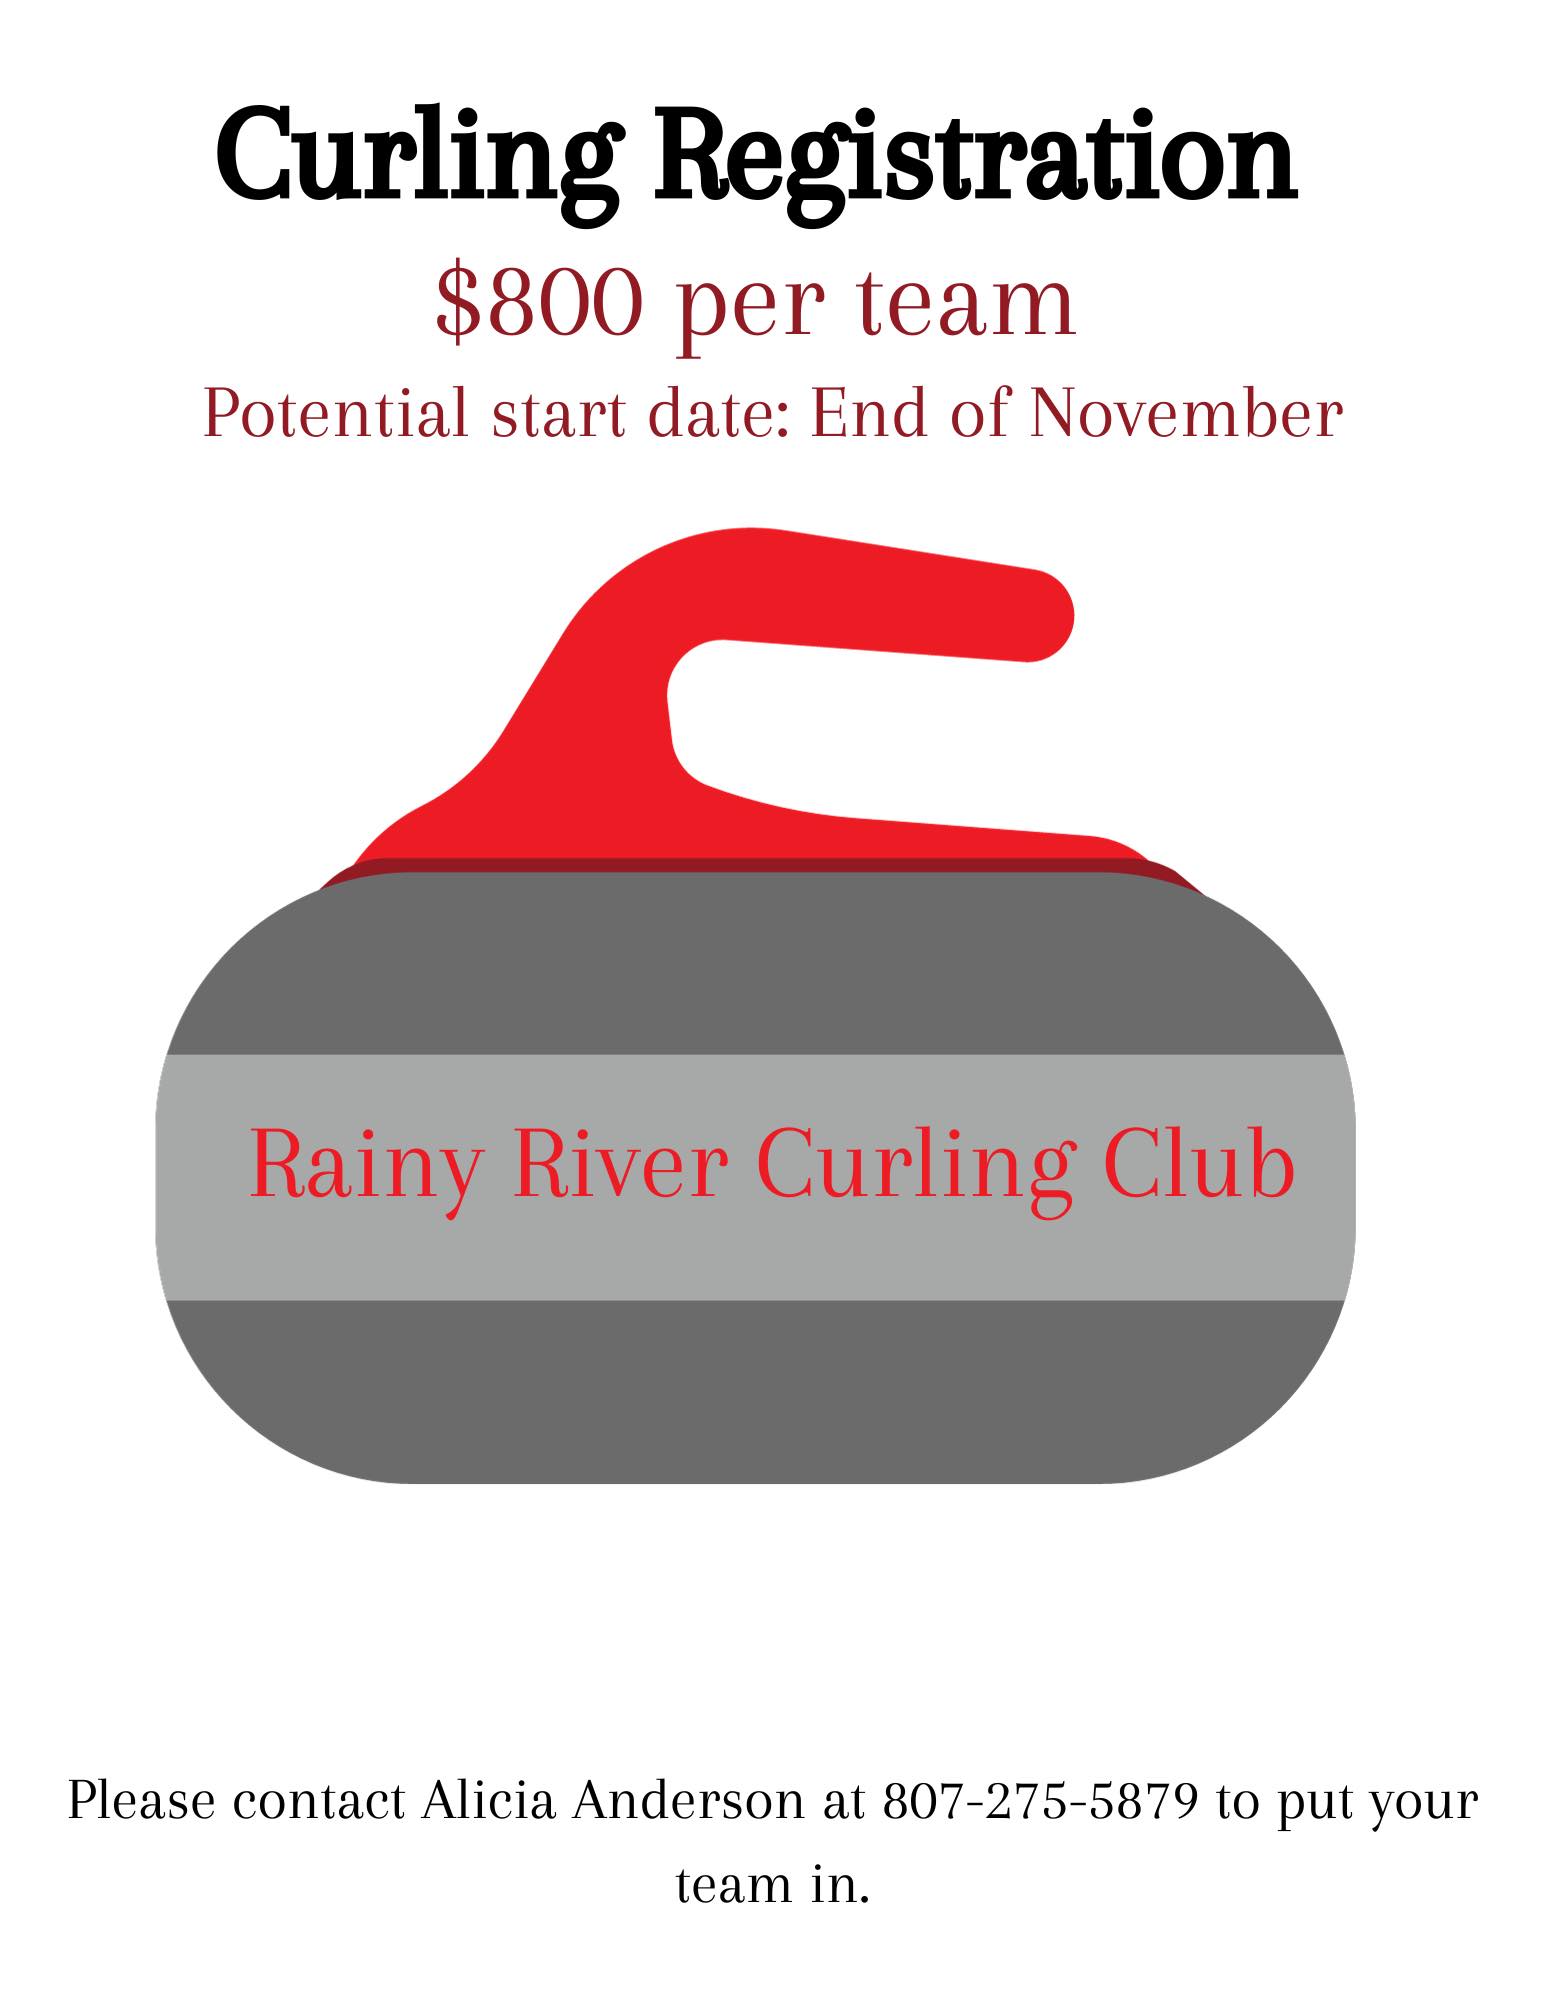 Rainy River Curling Club 319 Government, Rainy River Ontario P0W 1L0